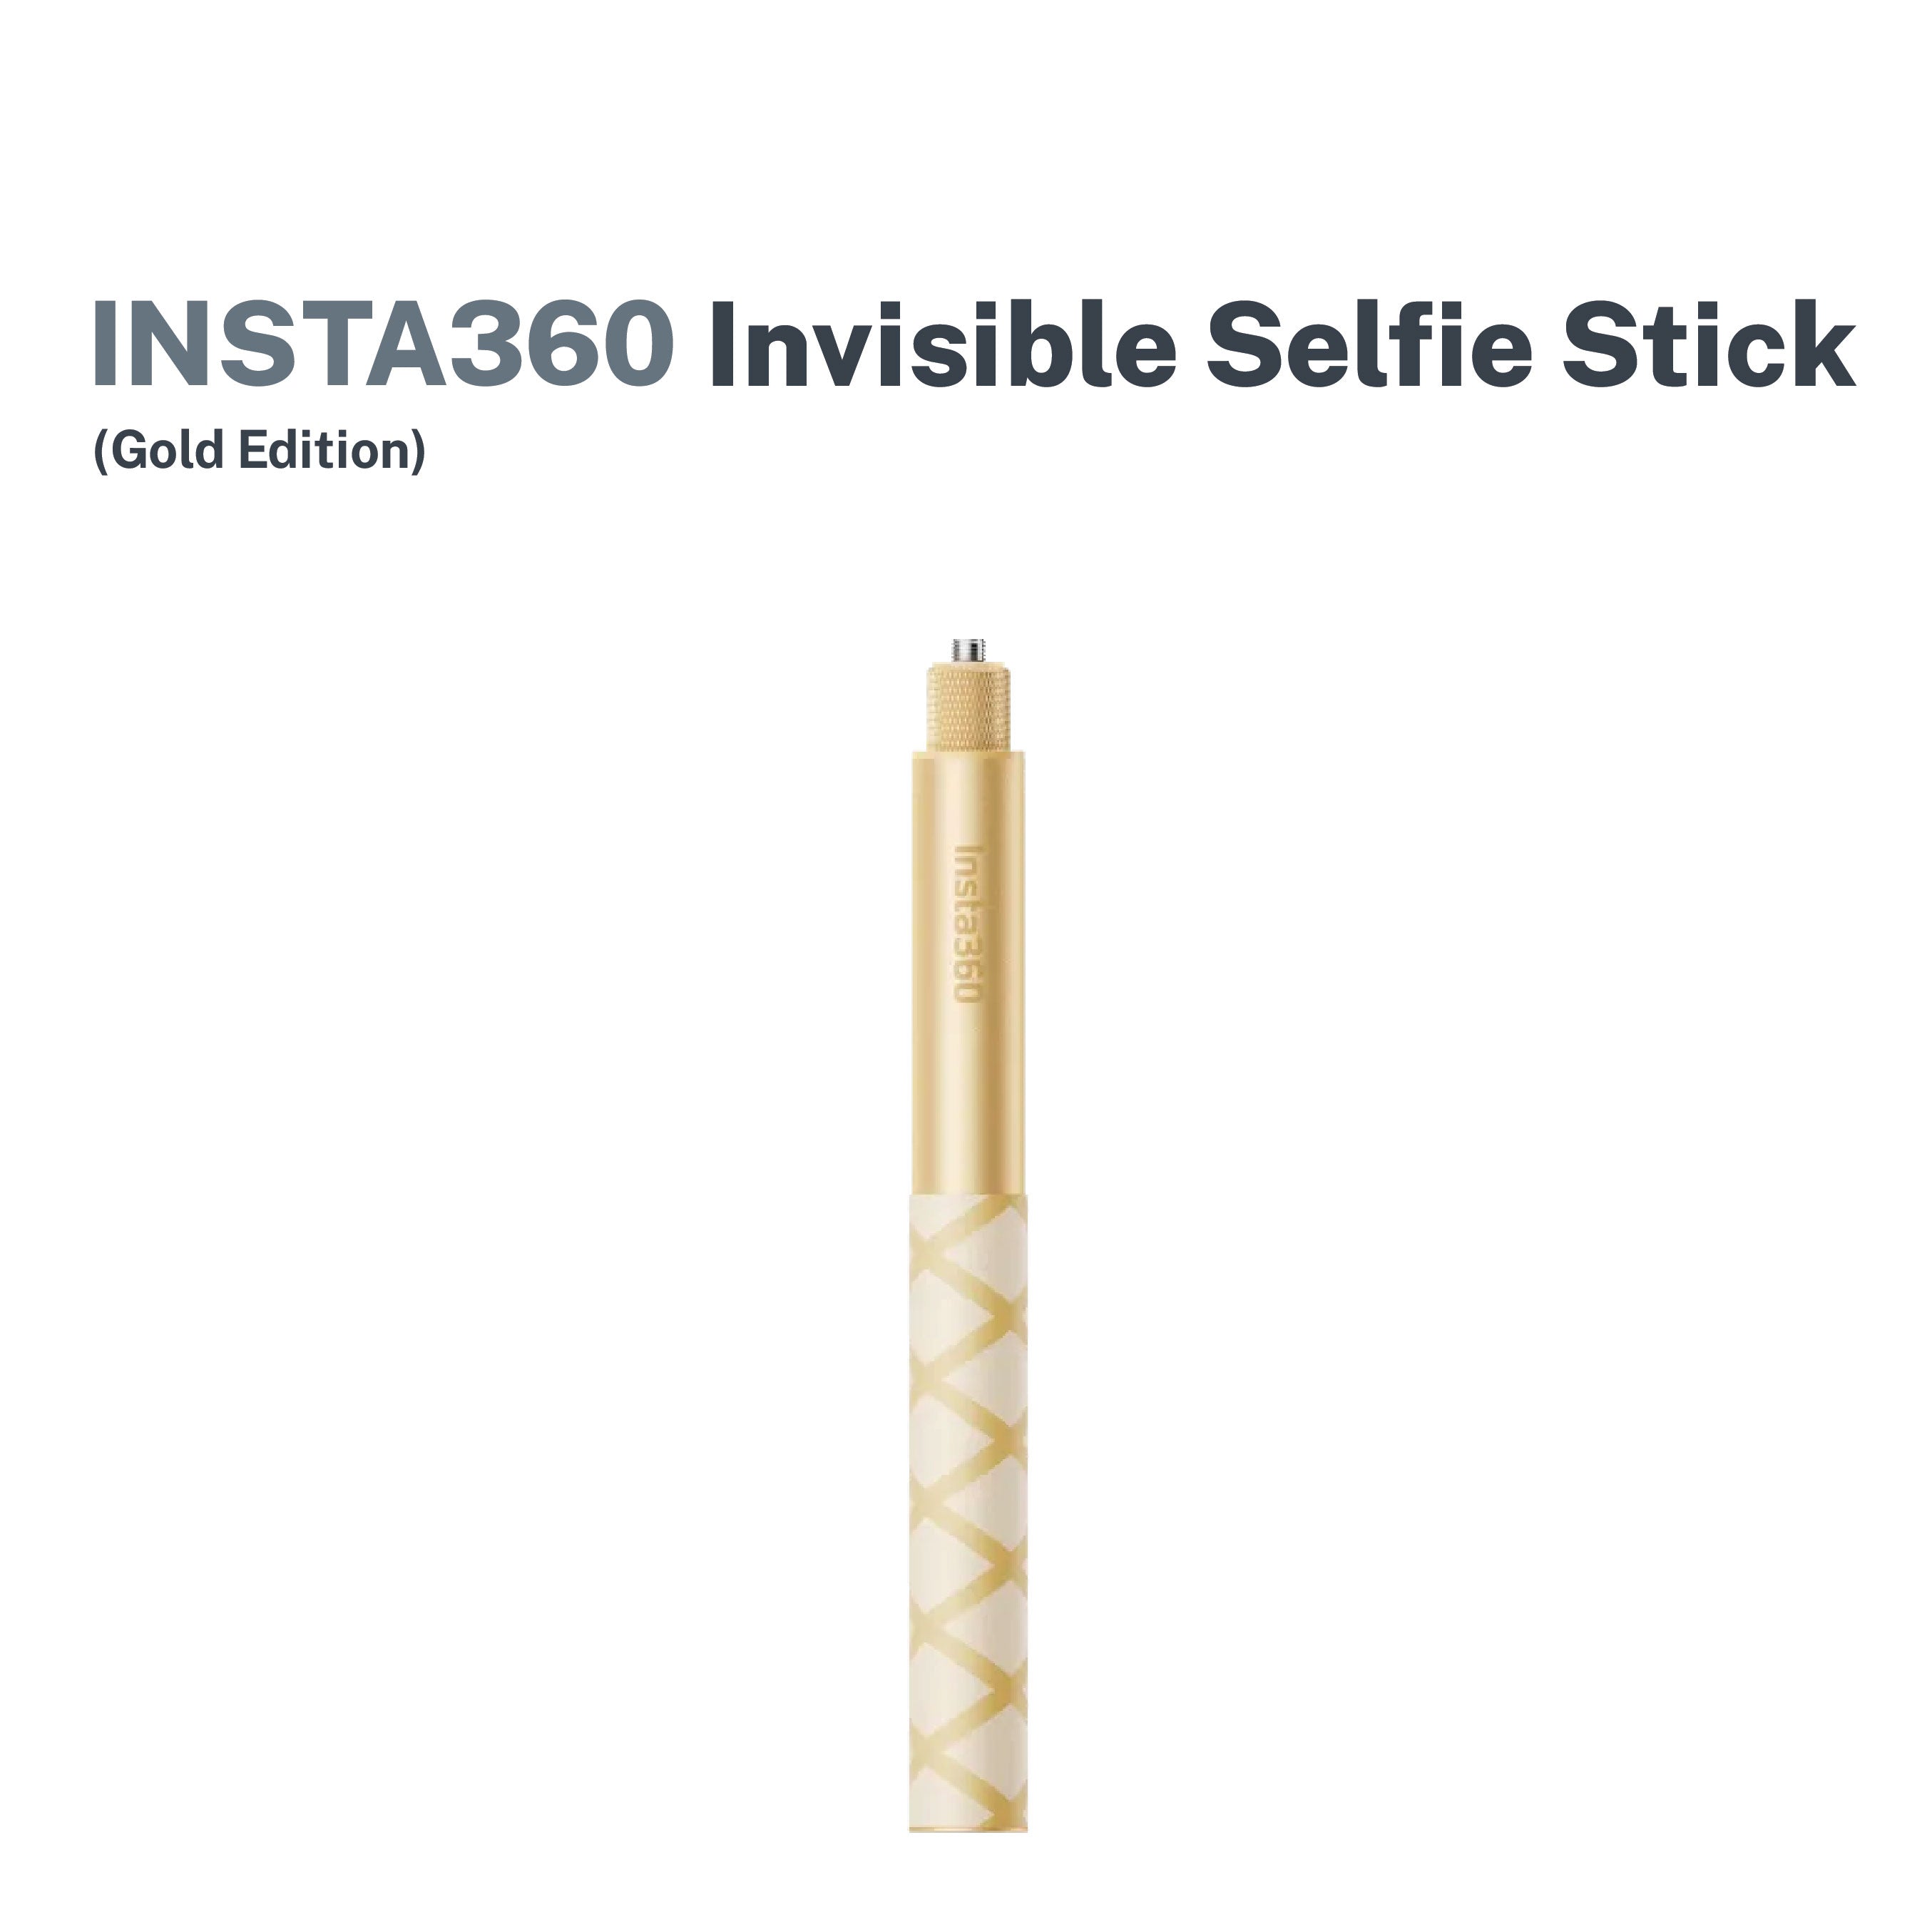 Best Selfie Stick for 360 camera ? Insta360 Invisible Selfie Stick